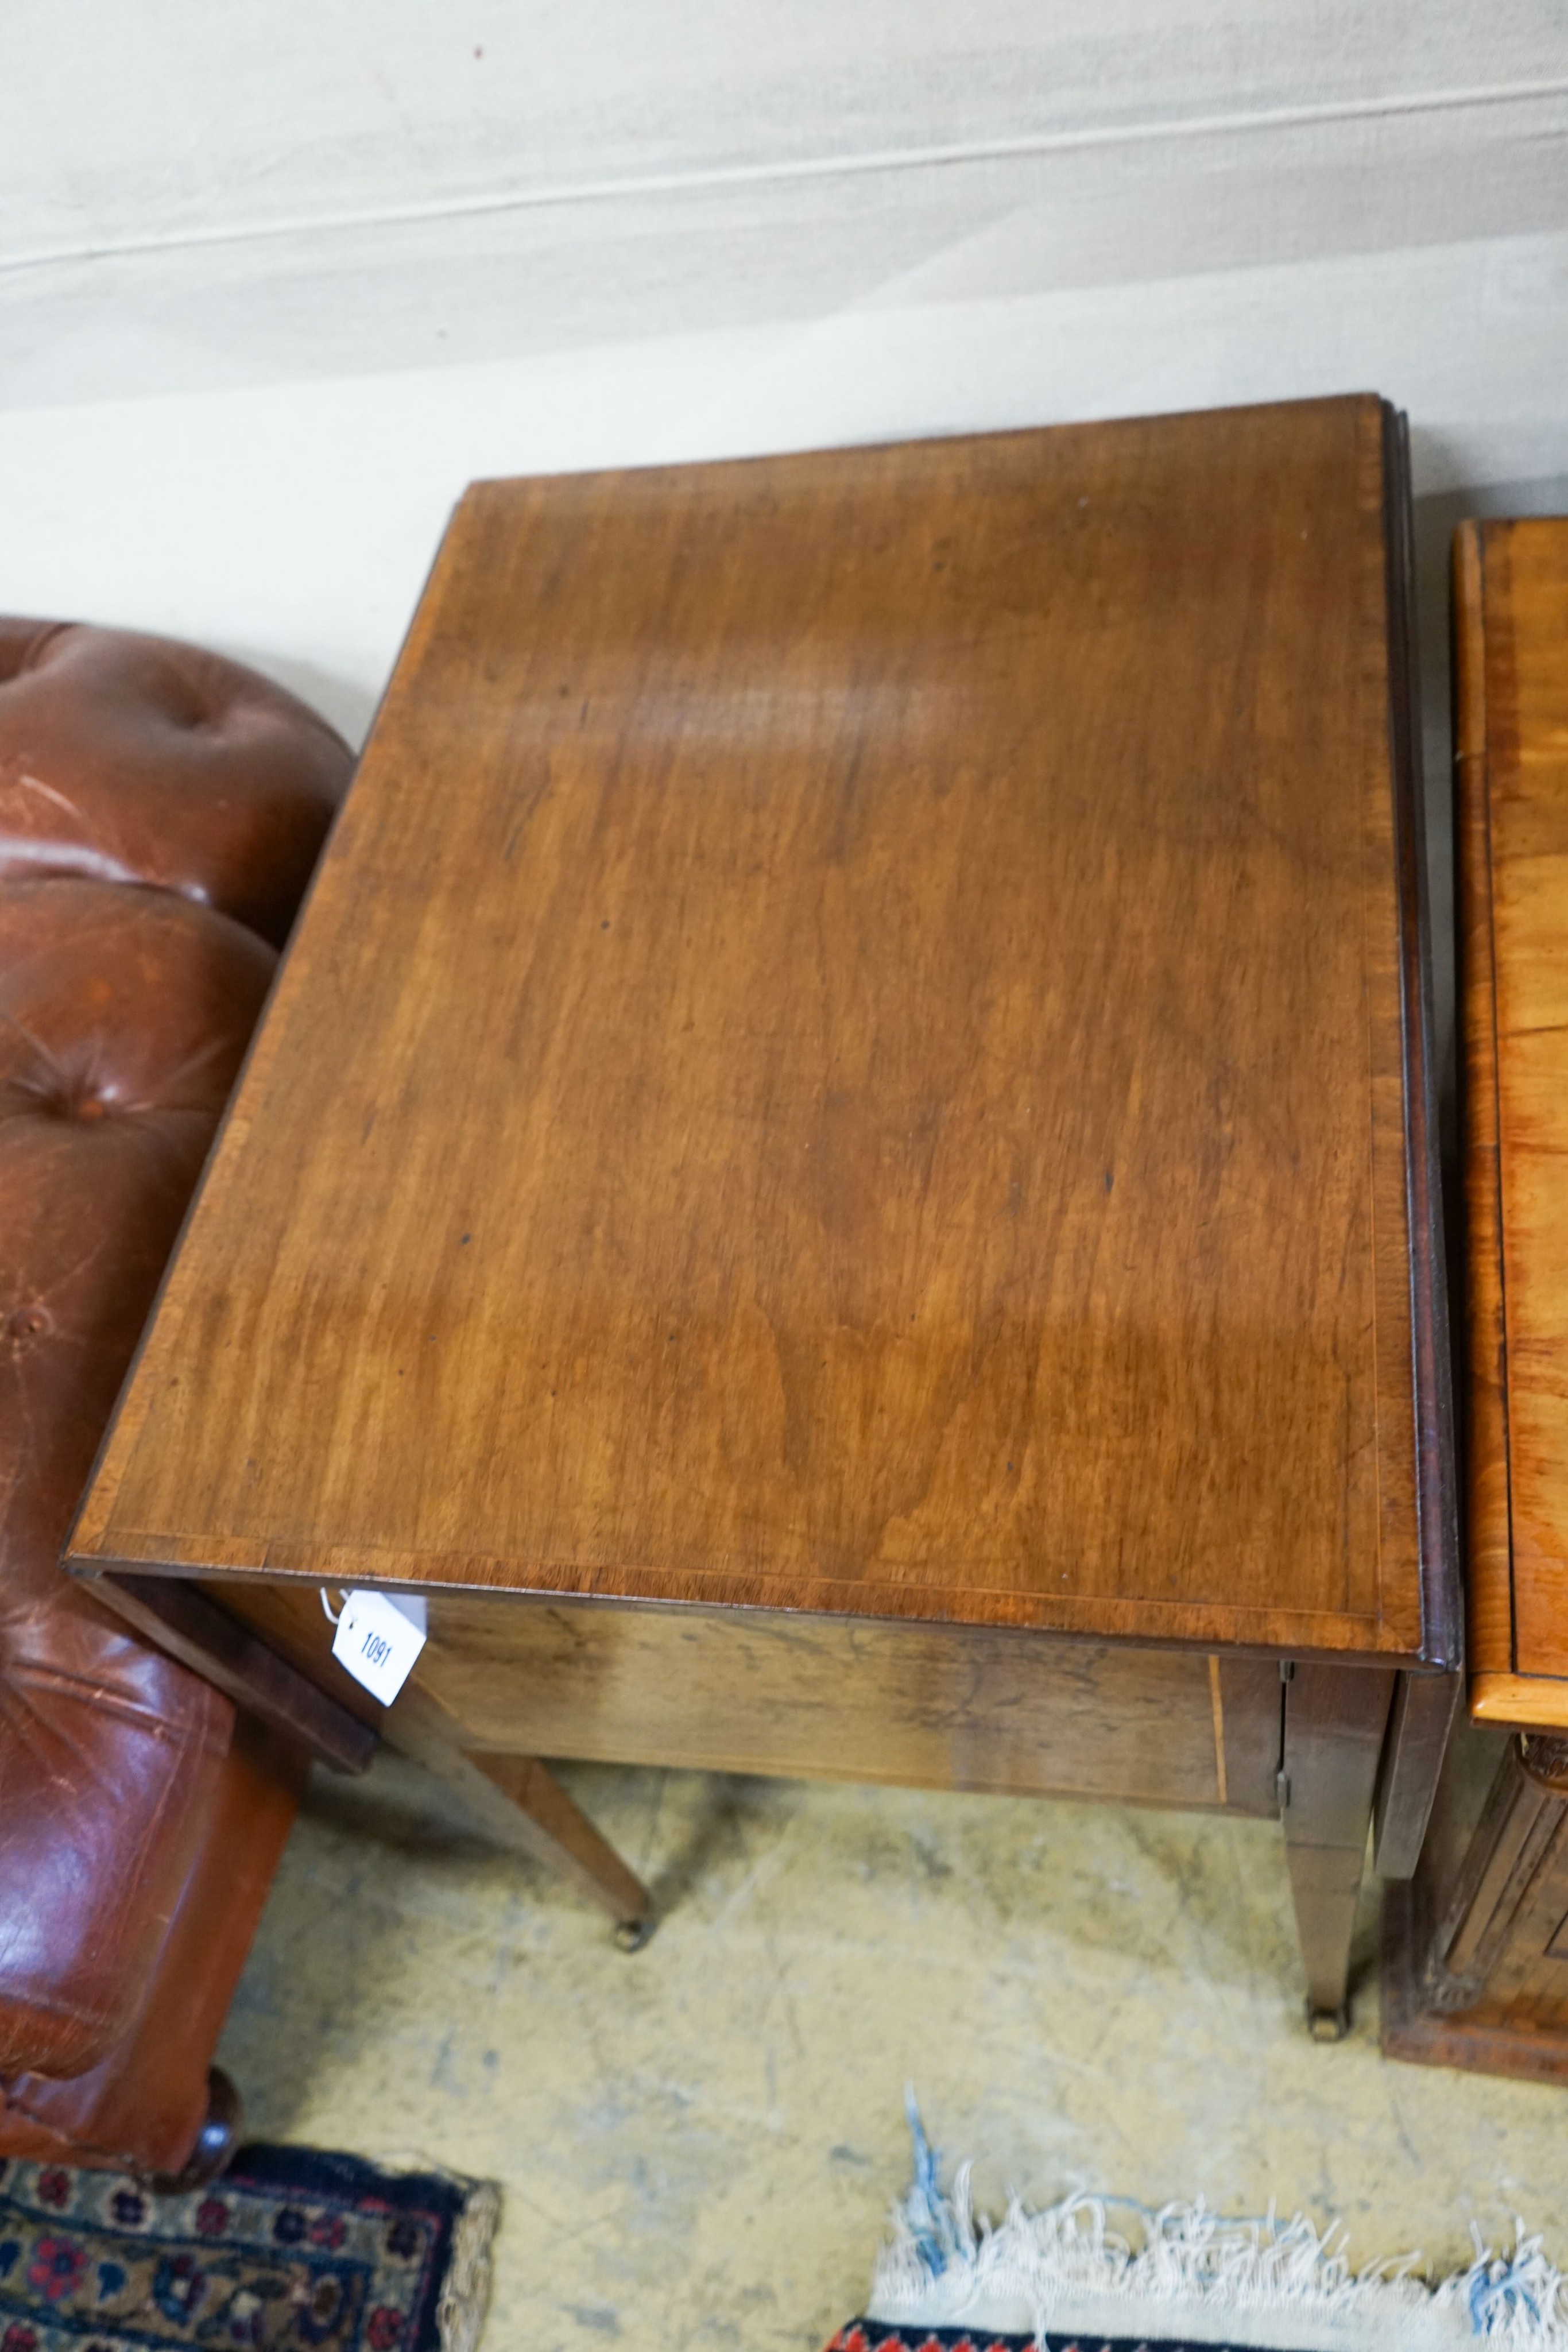 A 19th century mahogany Pembroke table / cabinet, width 52cm, depth 65cm, height 76cm